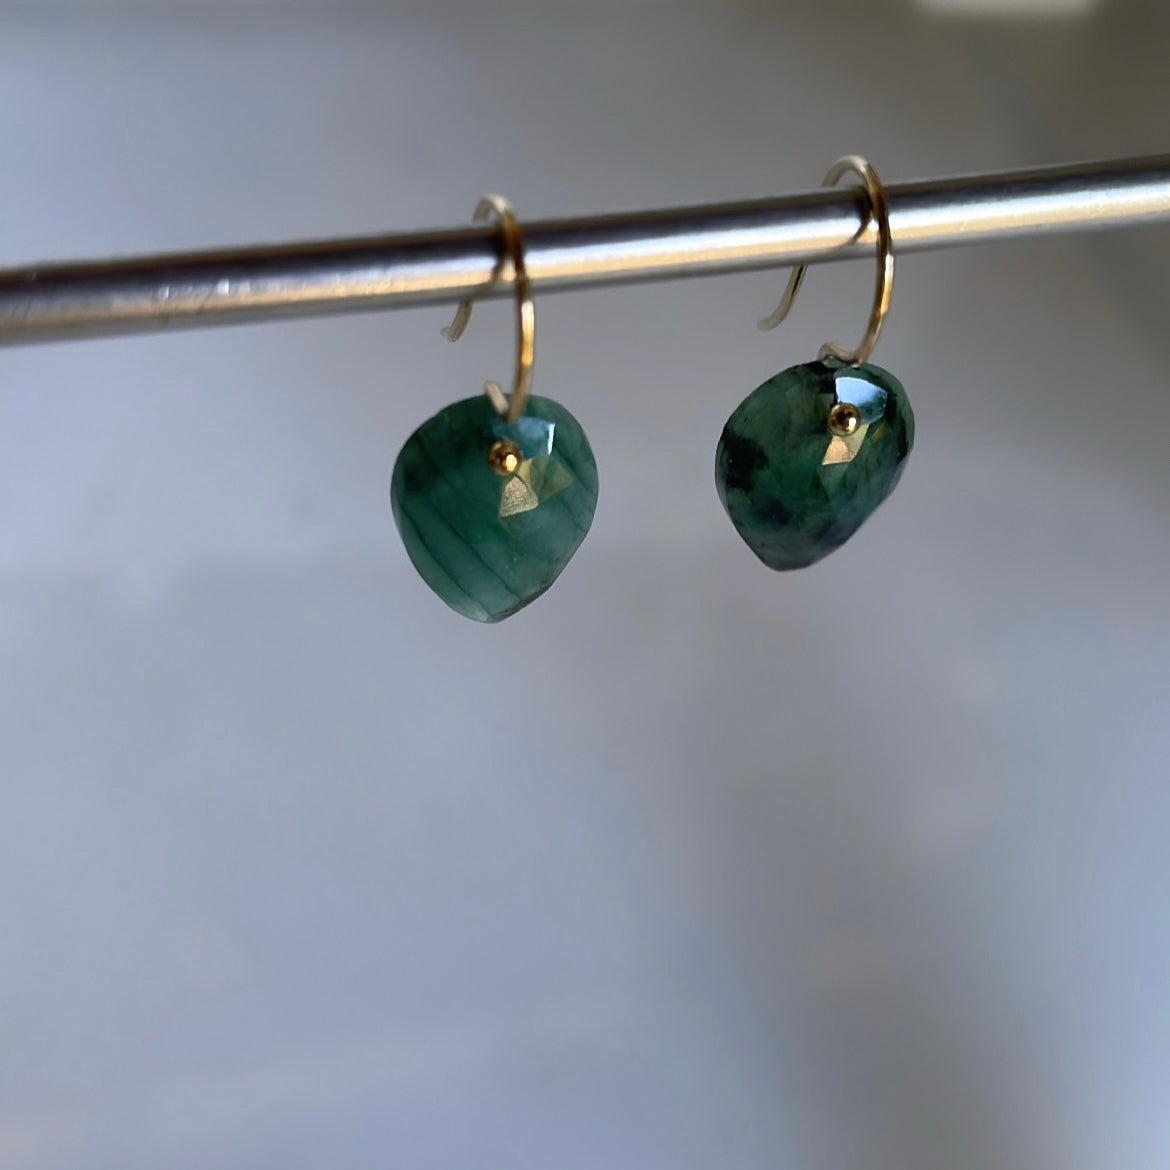 Petite point drop emerald earrings-serena kojimoto studio